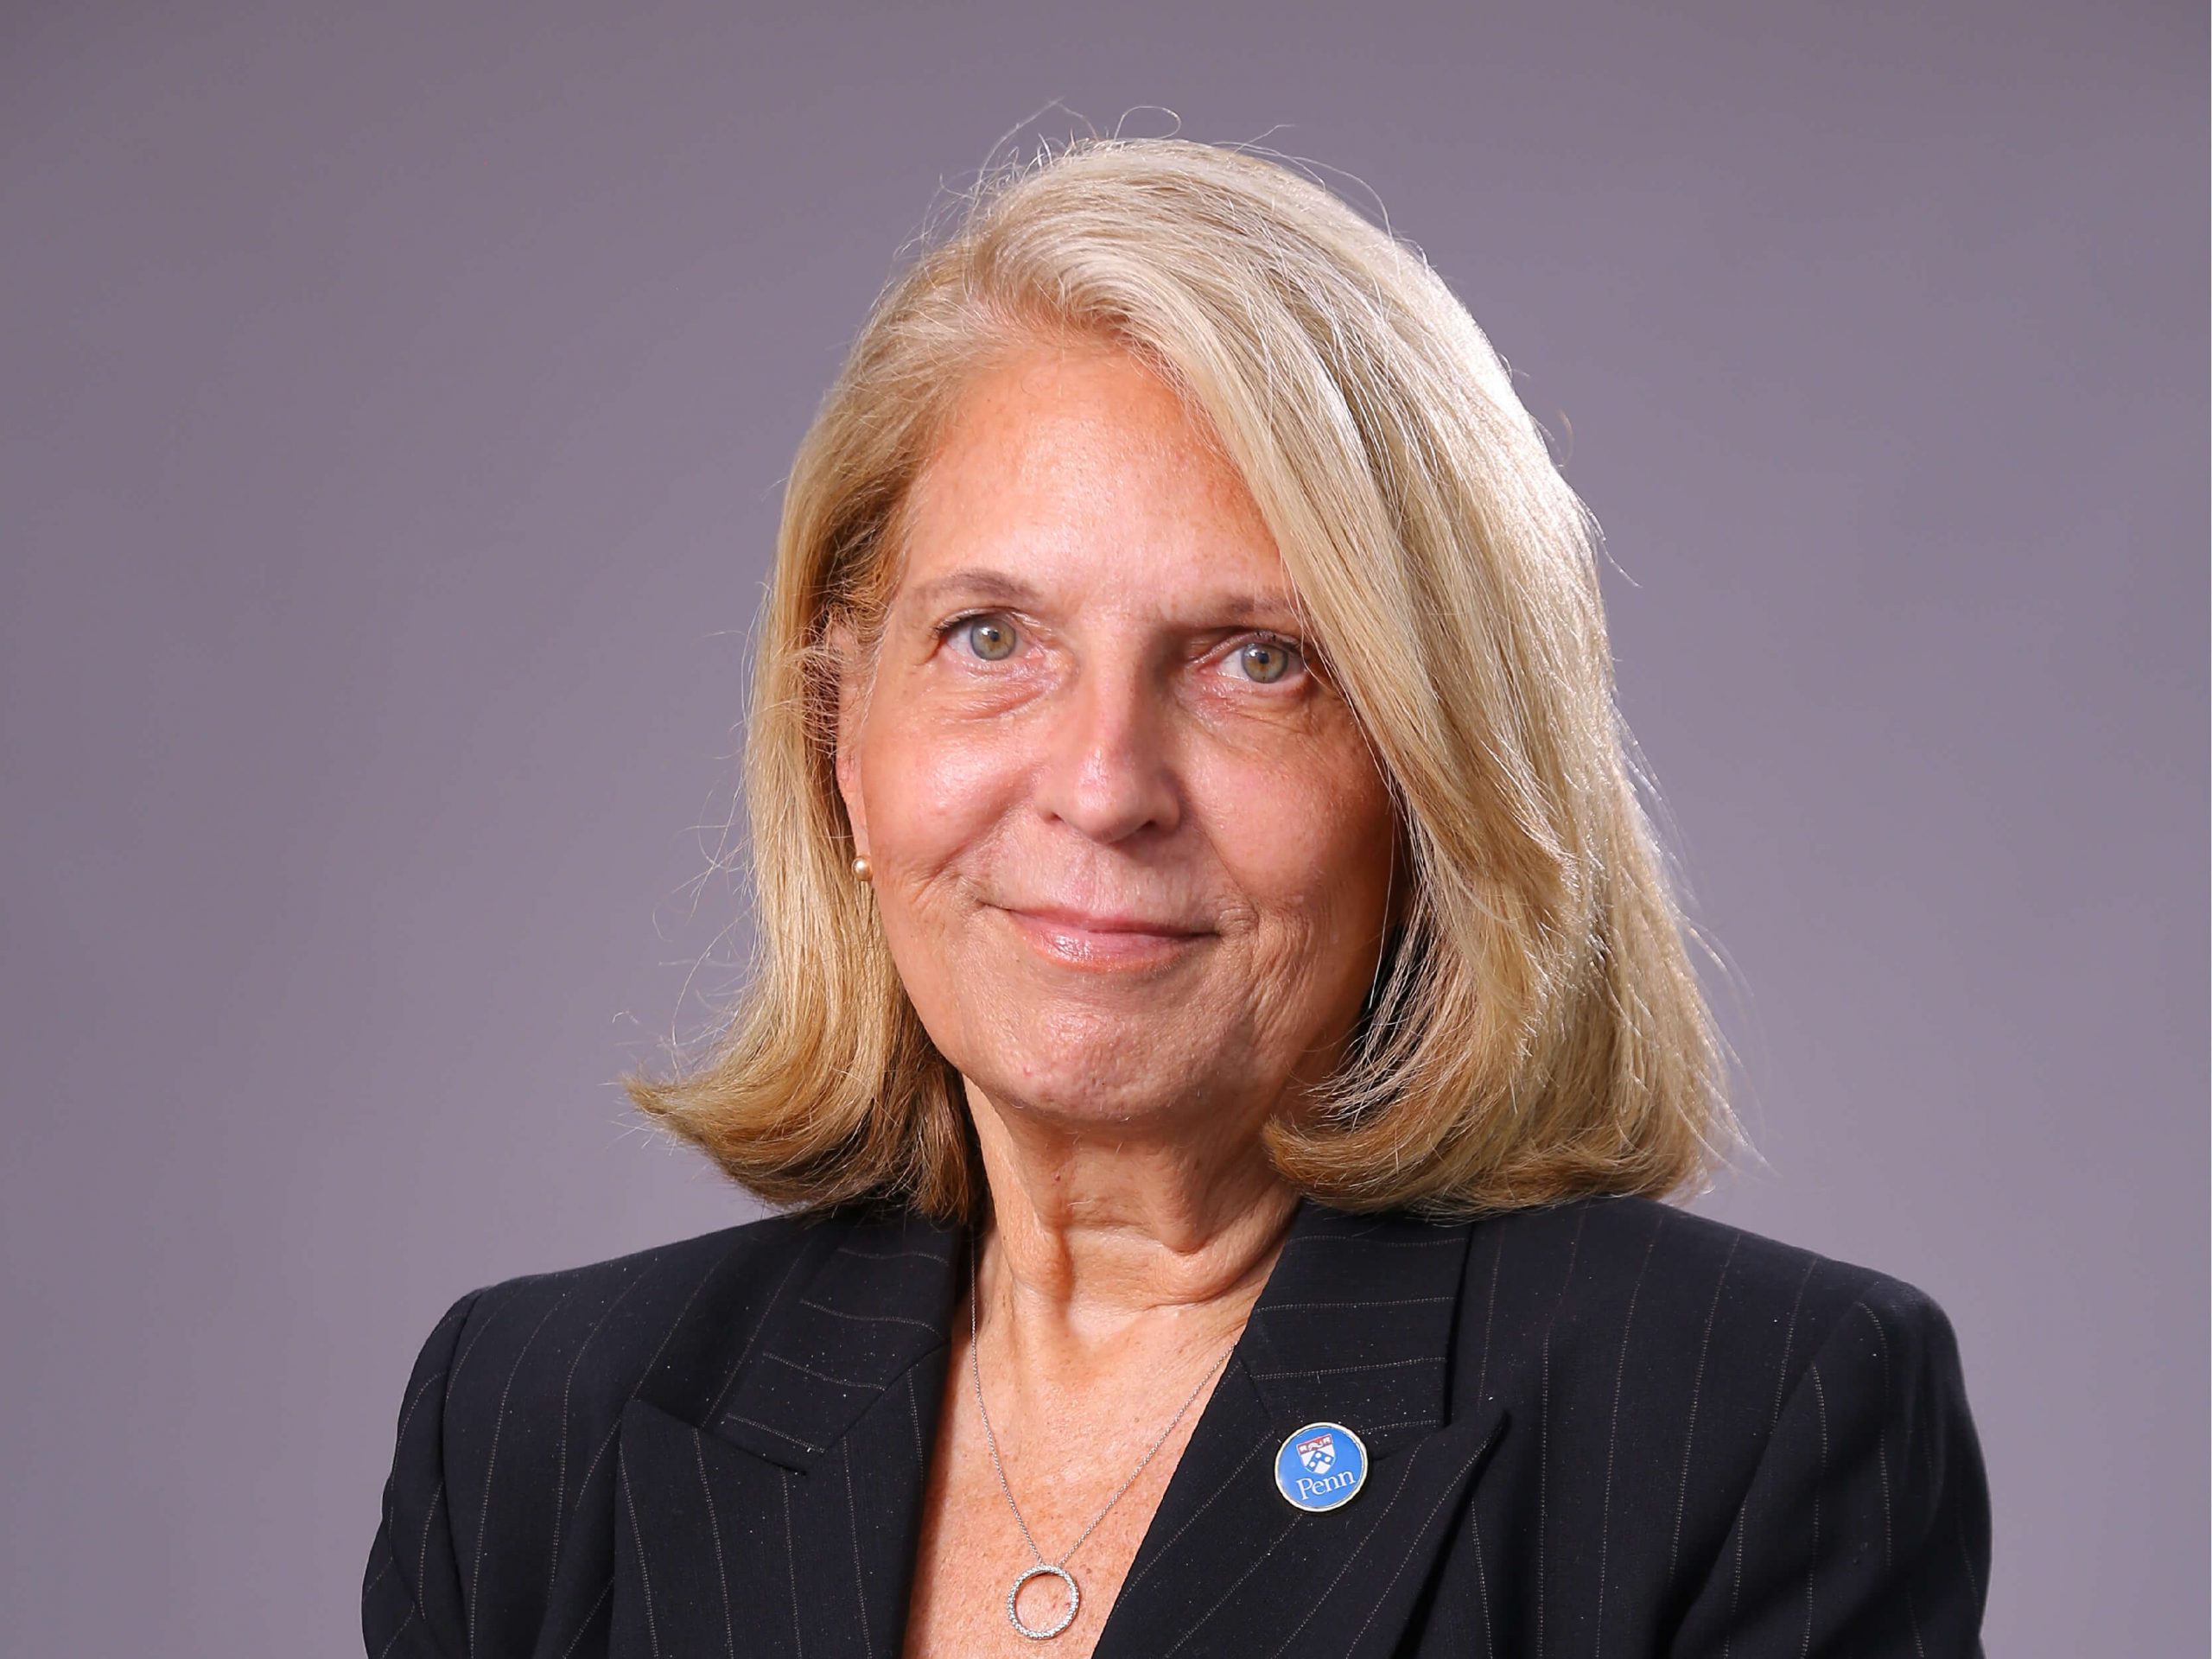 Gail Morrison